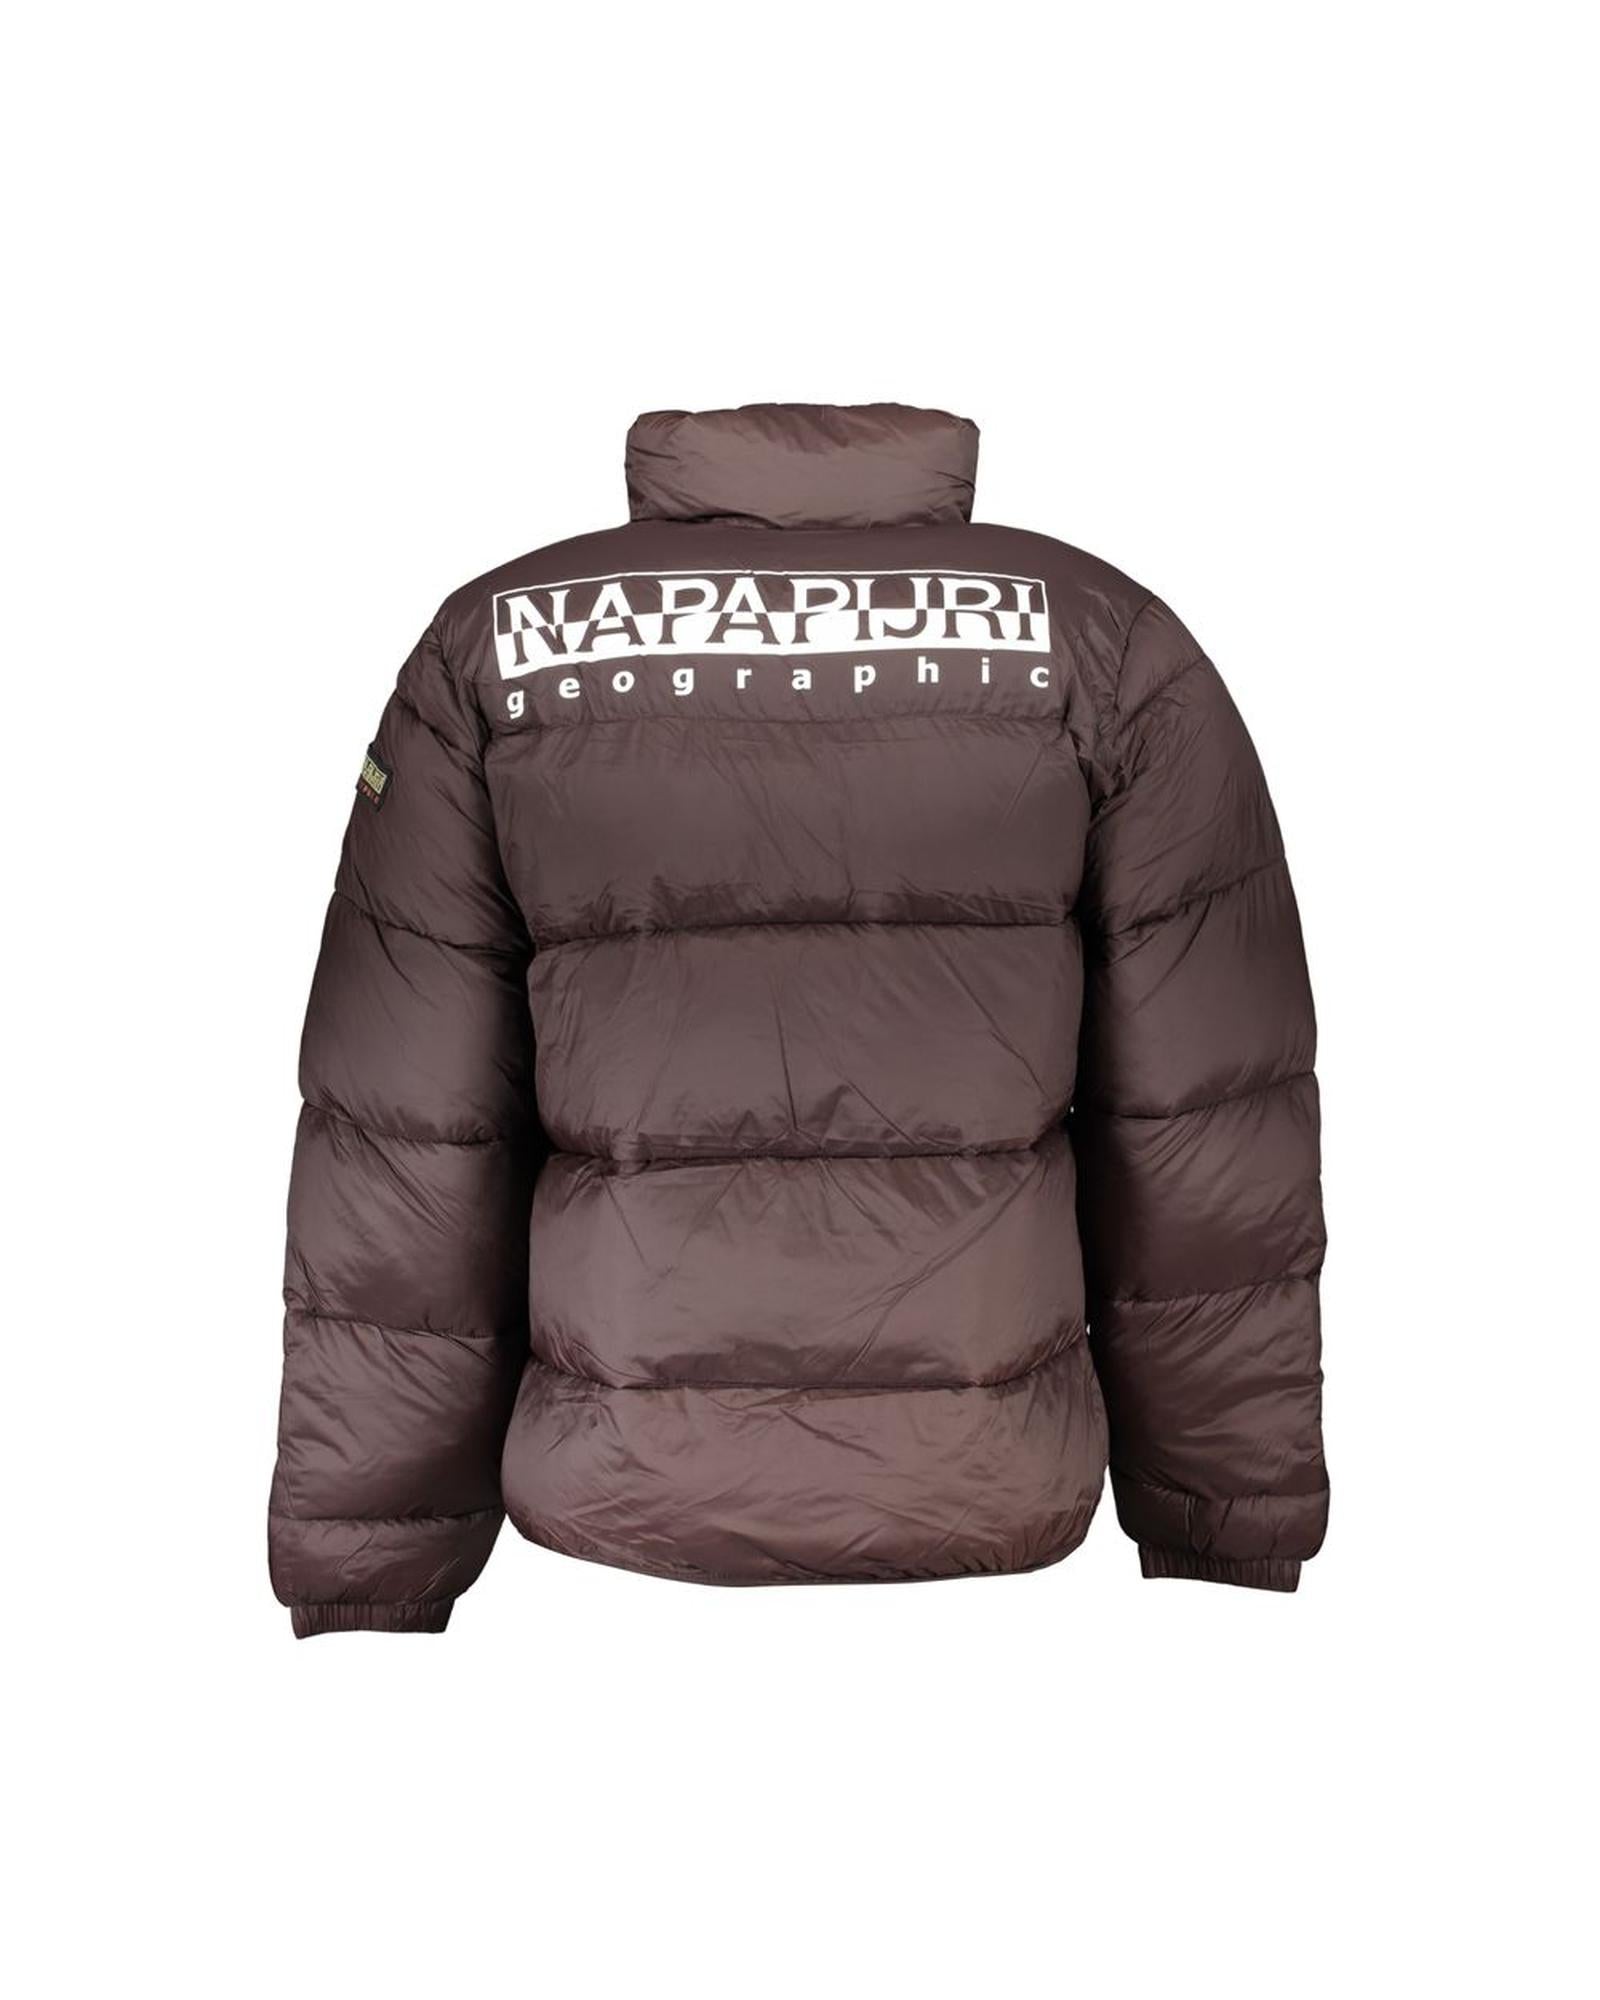 Napapijri Men's Brown Polyamide Jacket - 2XL